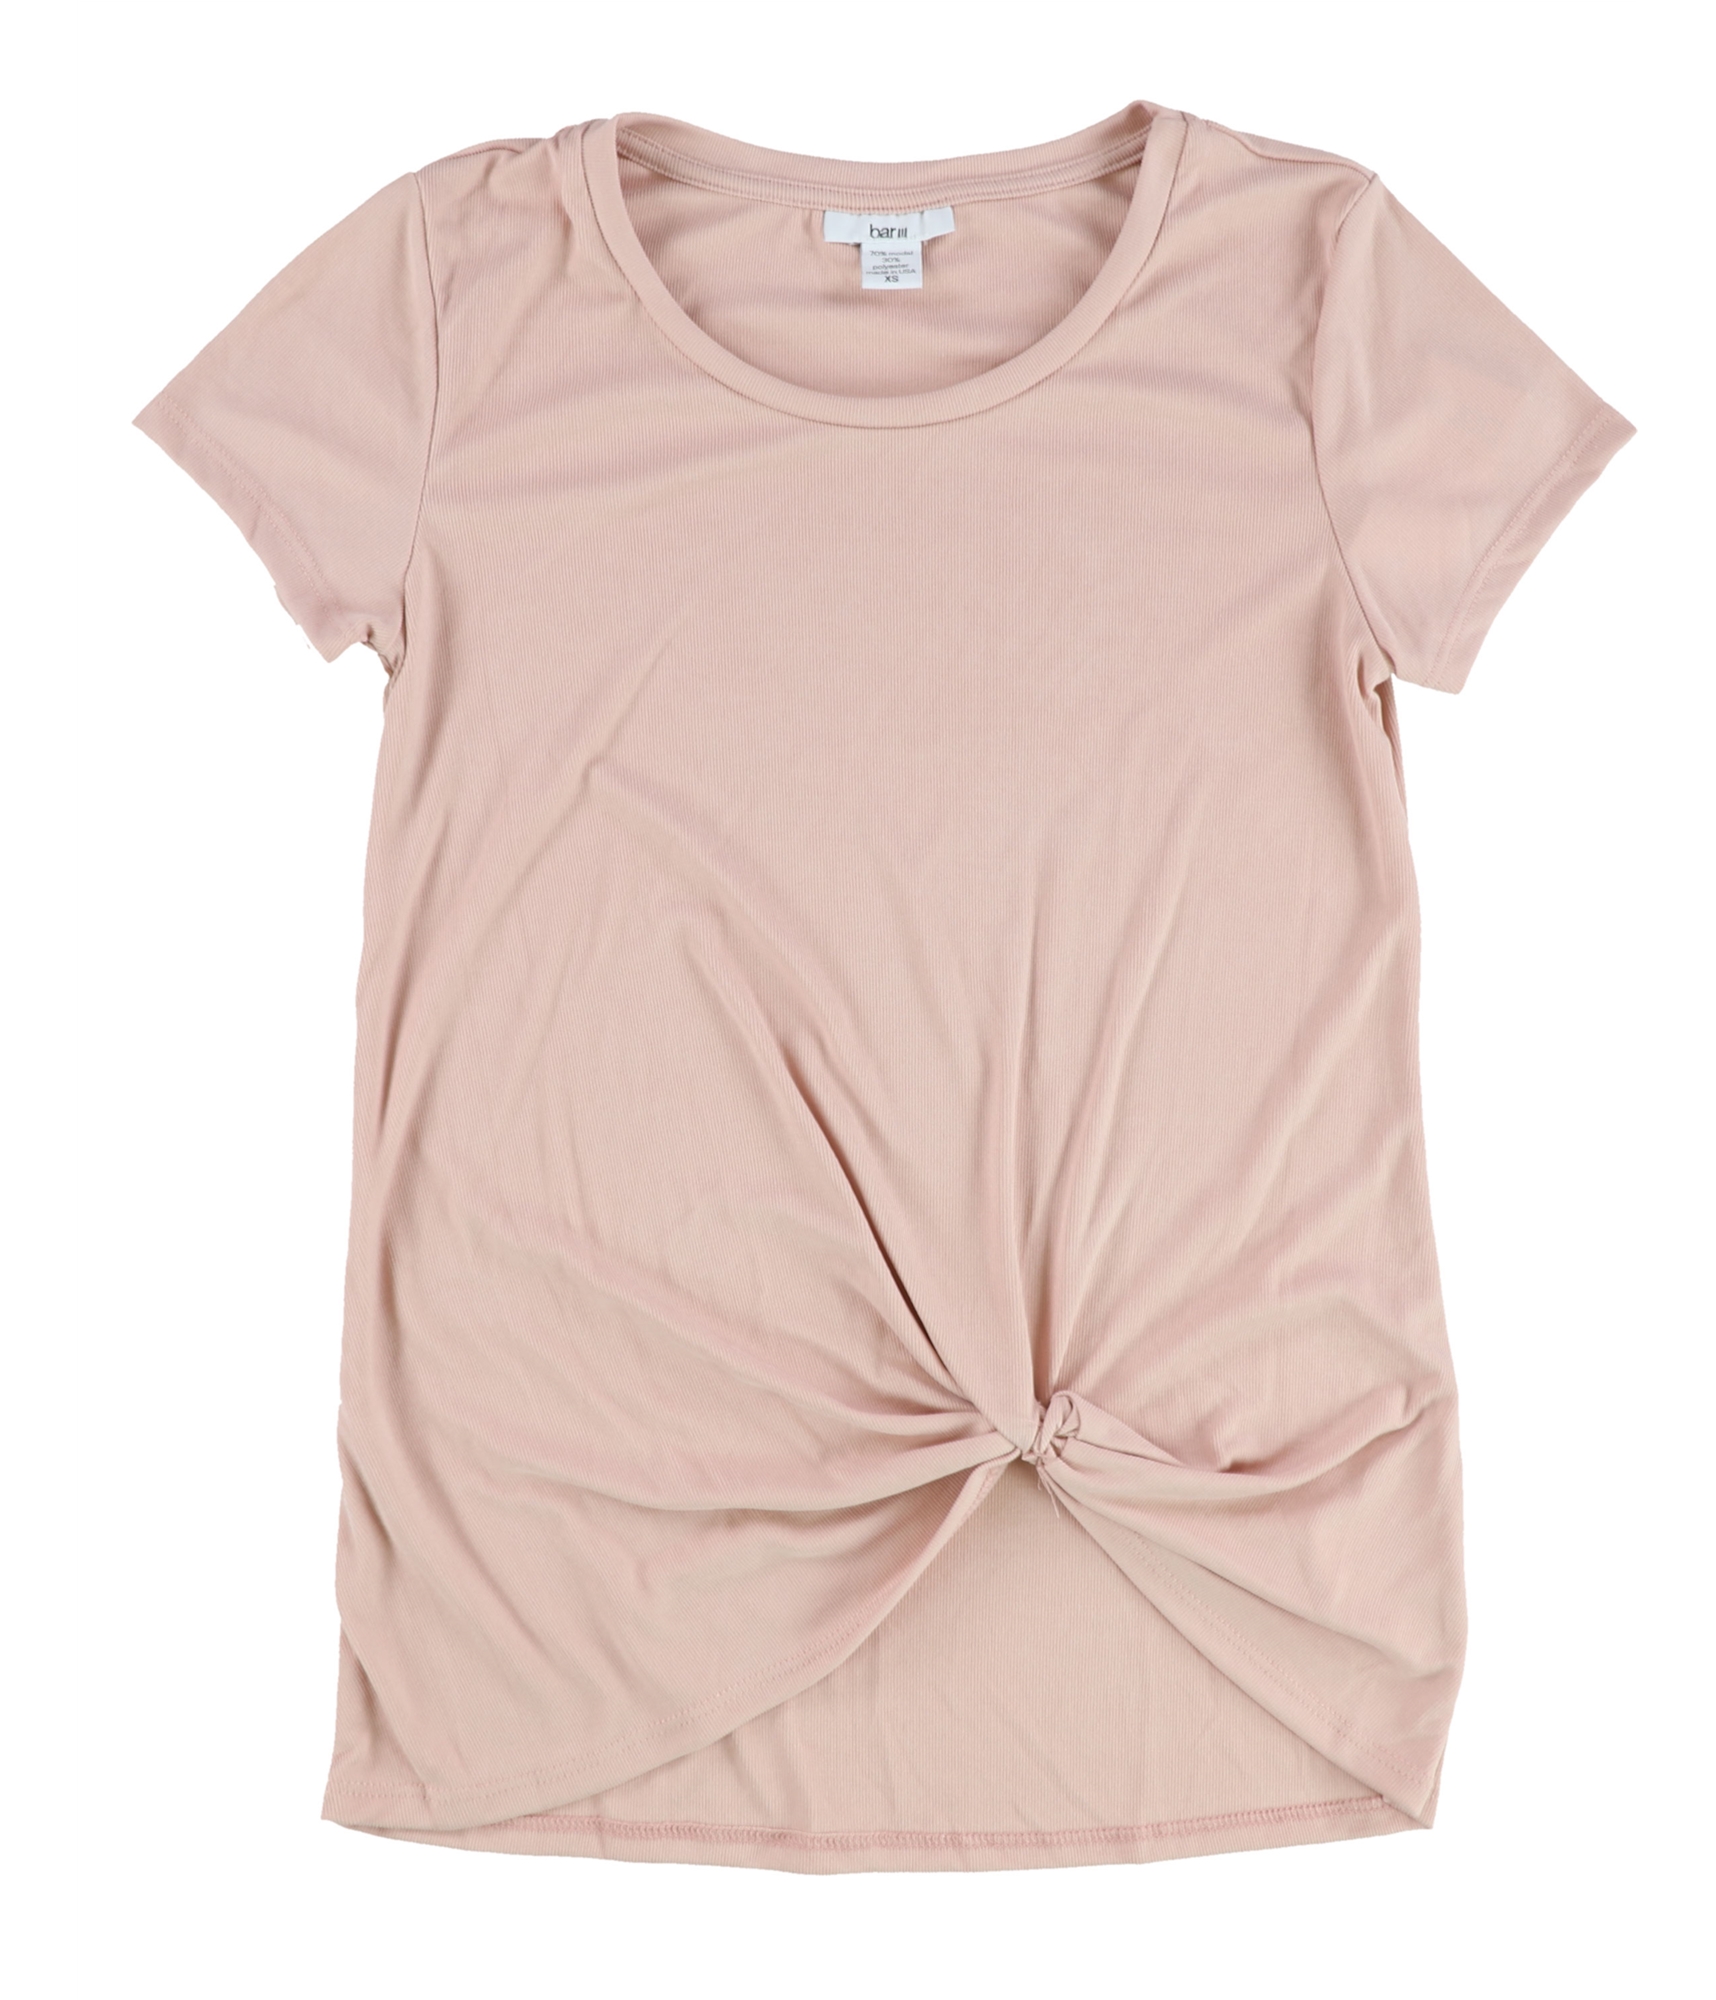 Bar Iii Womens Tie Front Basic T-Shirt | eBay